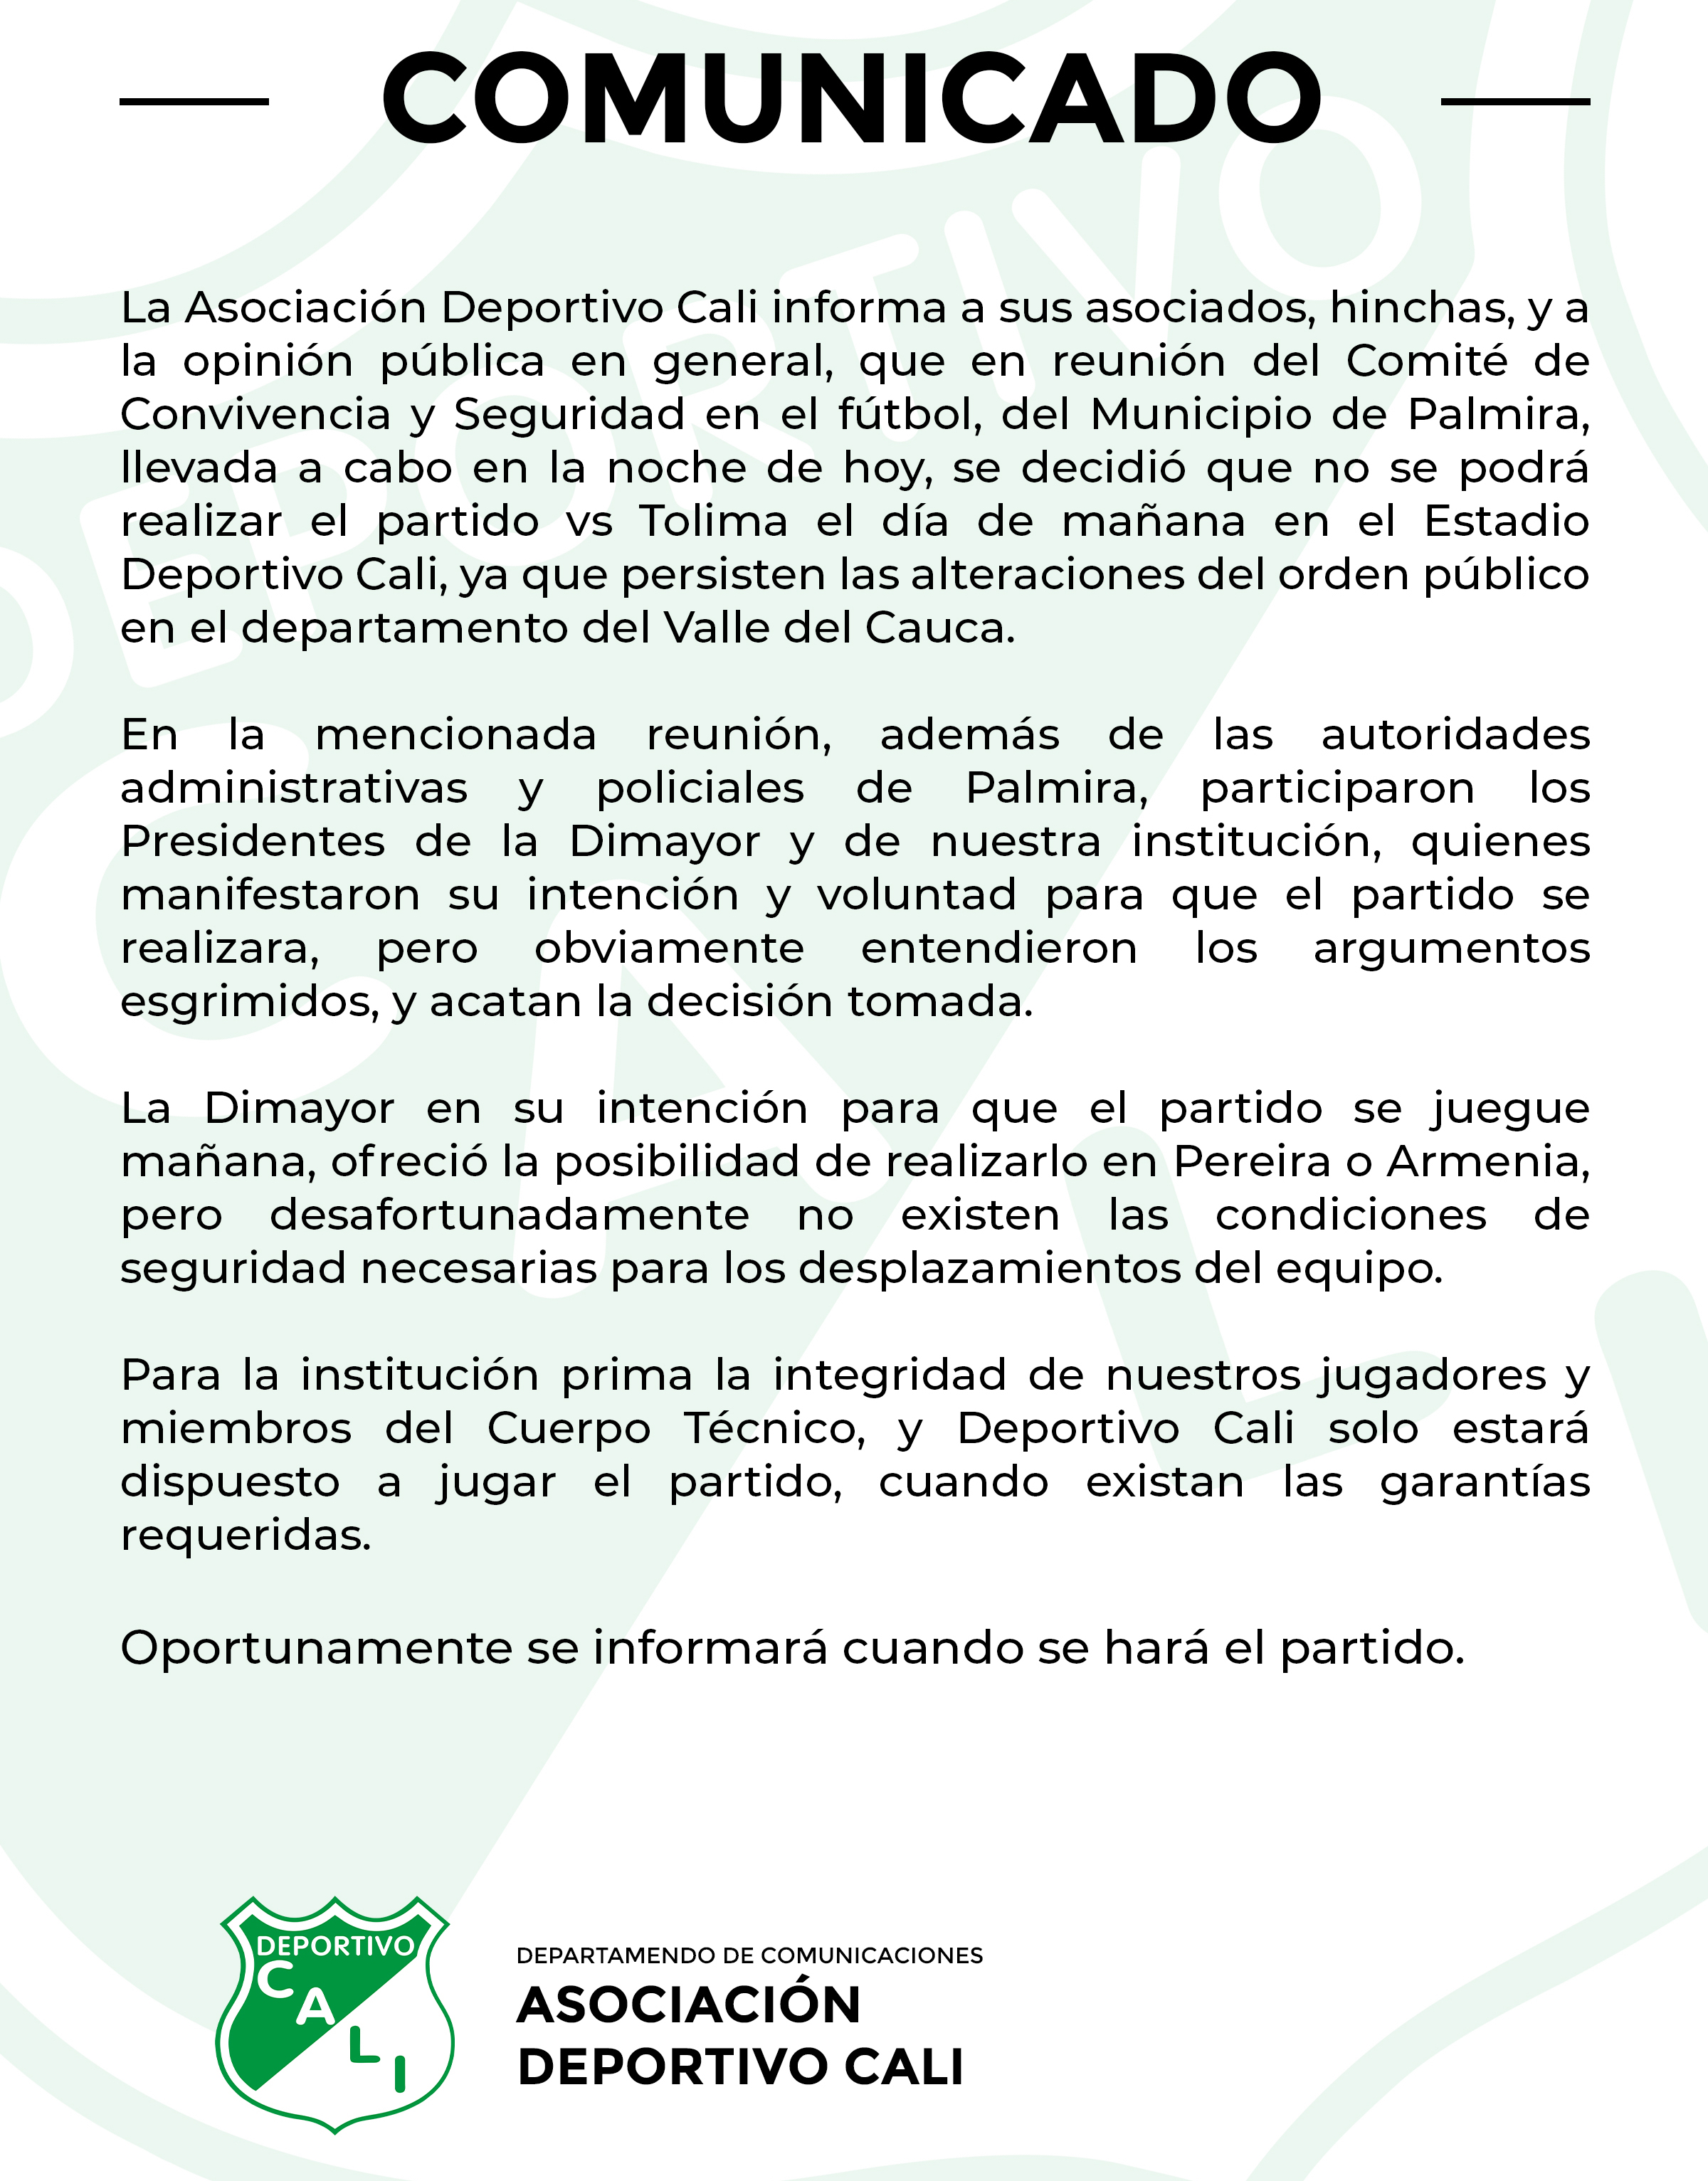 Comunicado oficial del Deportivo Cali. Twitter @AsoDeporCali.